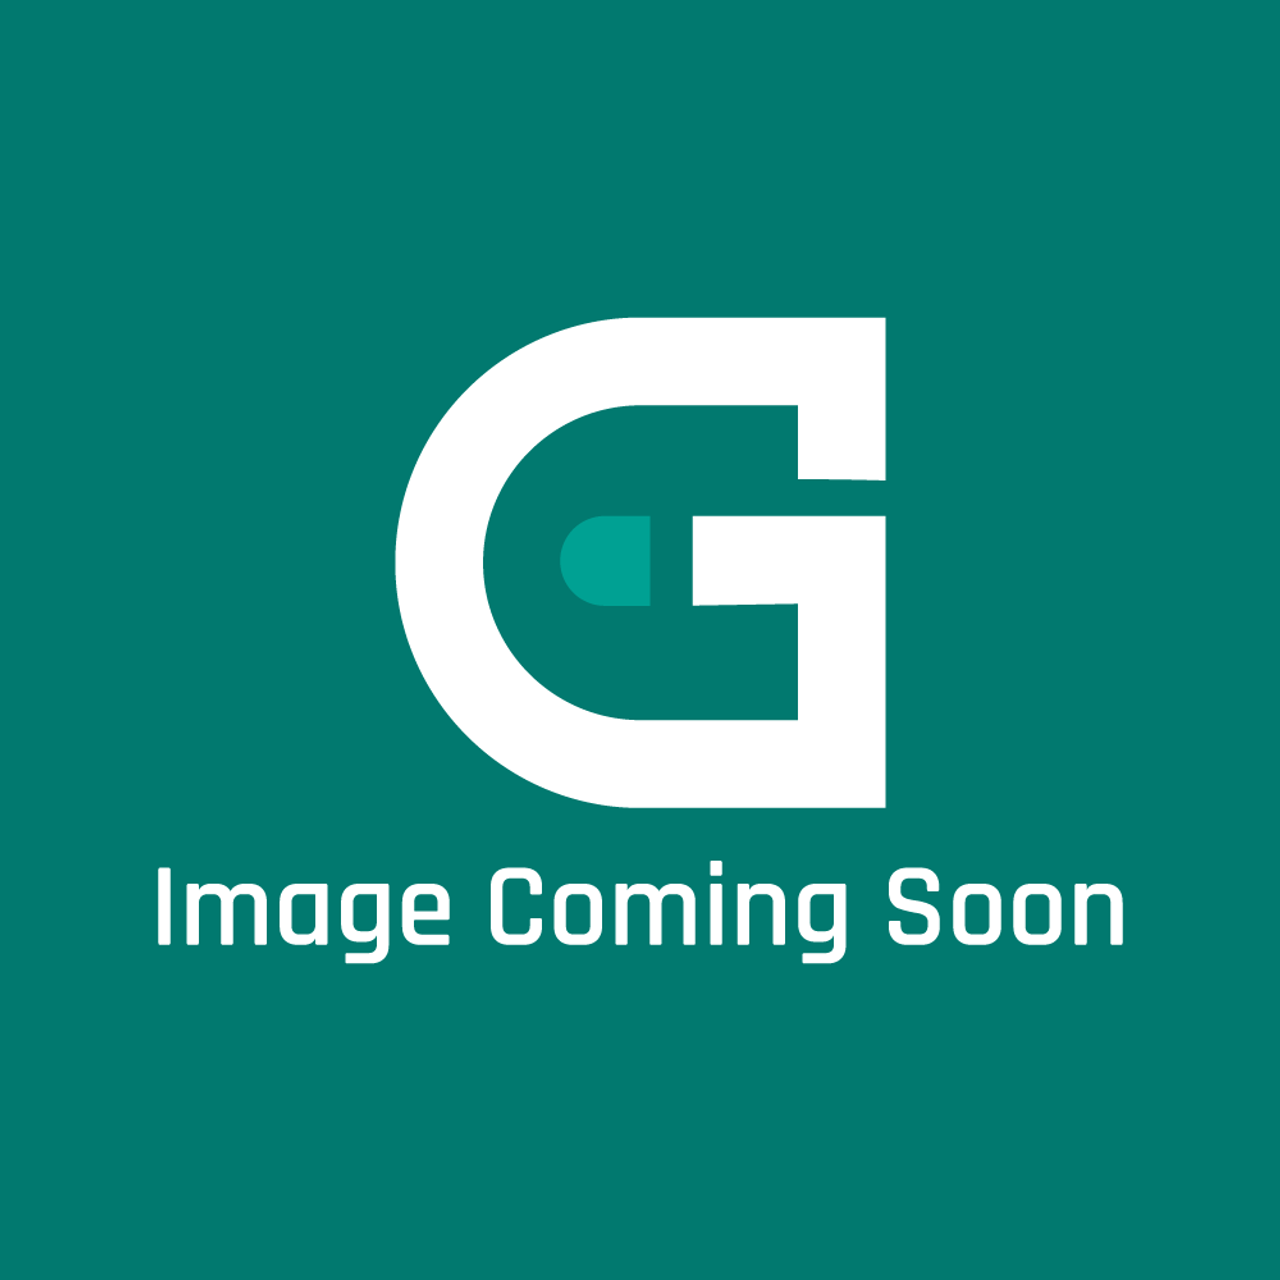 Scotsman F650105-57 - Valve Assy - Image Coming Soon!